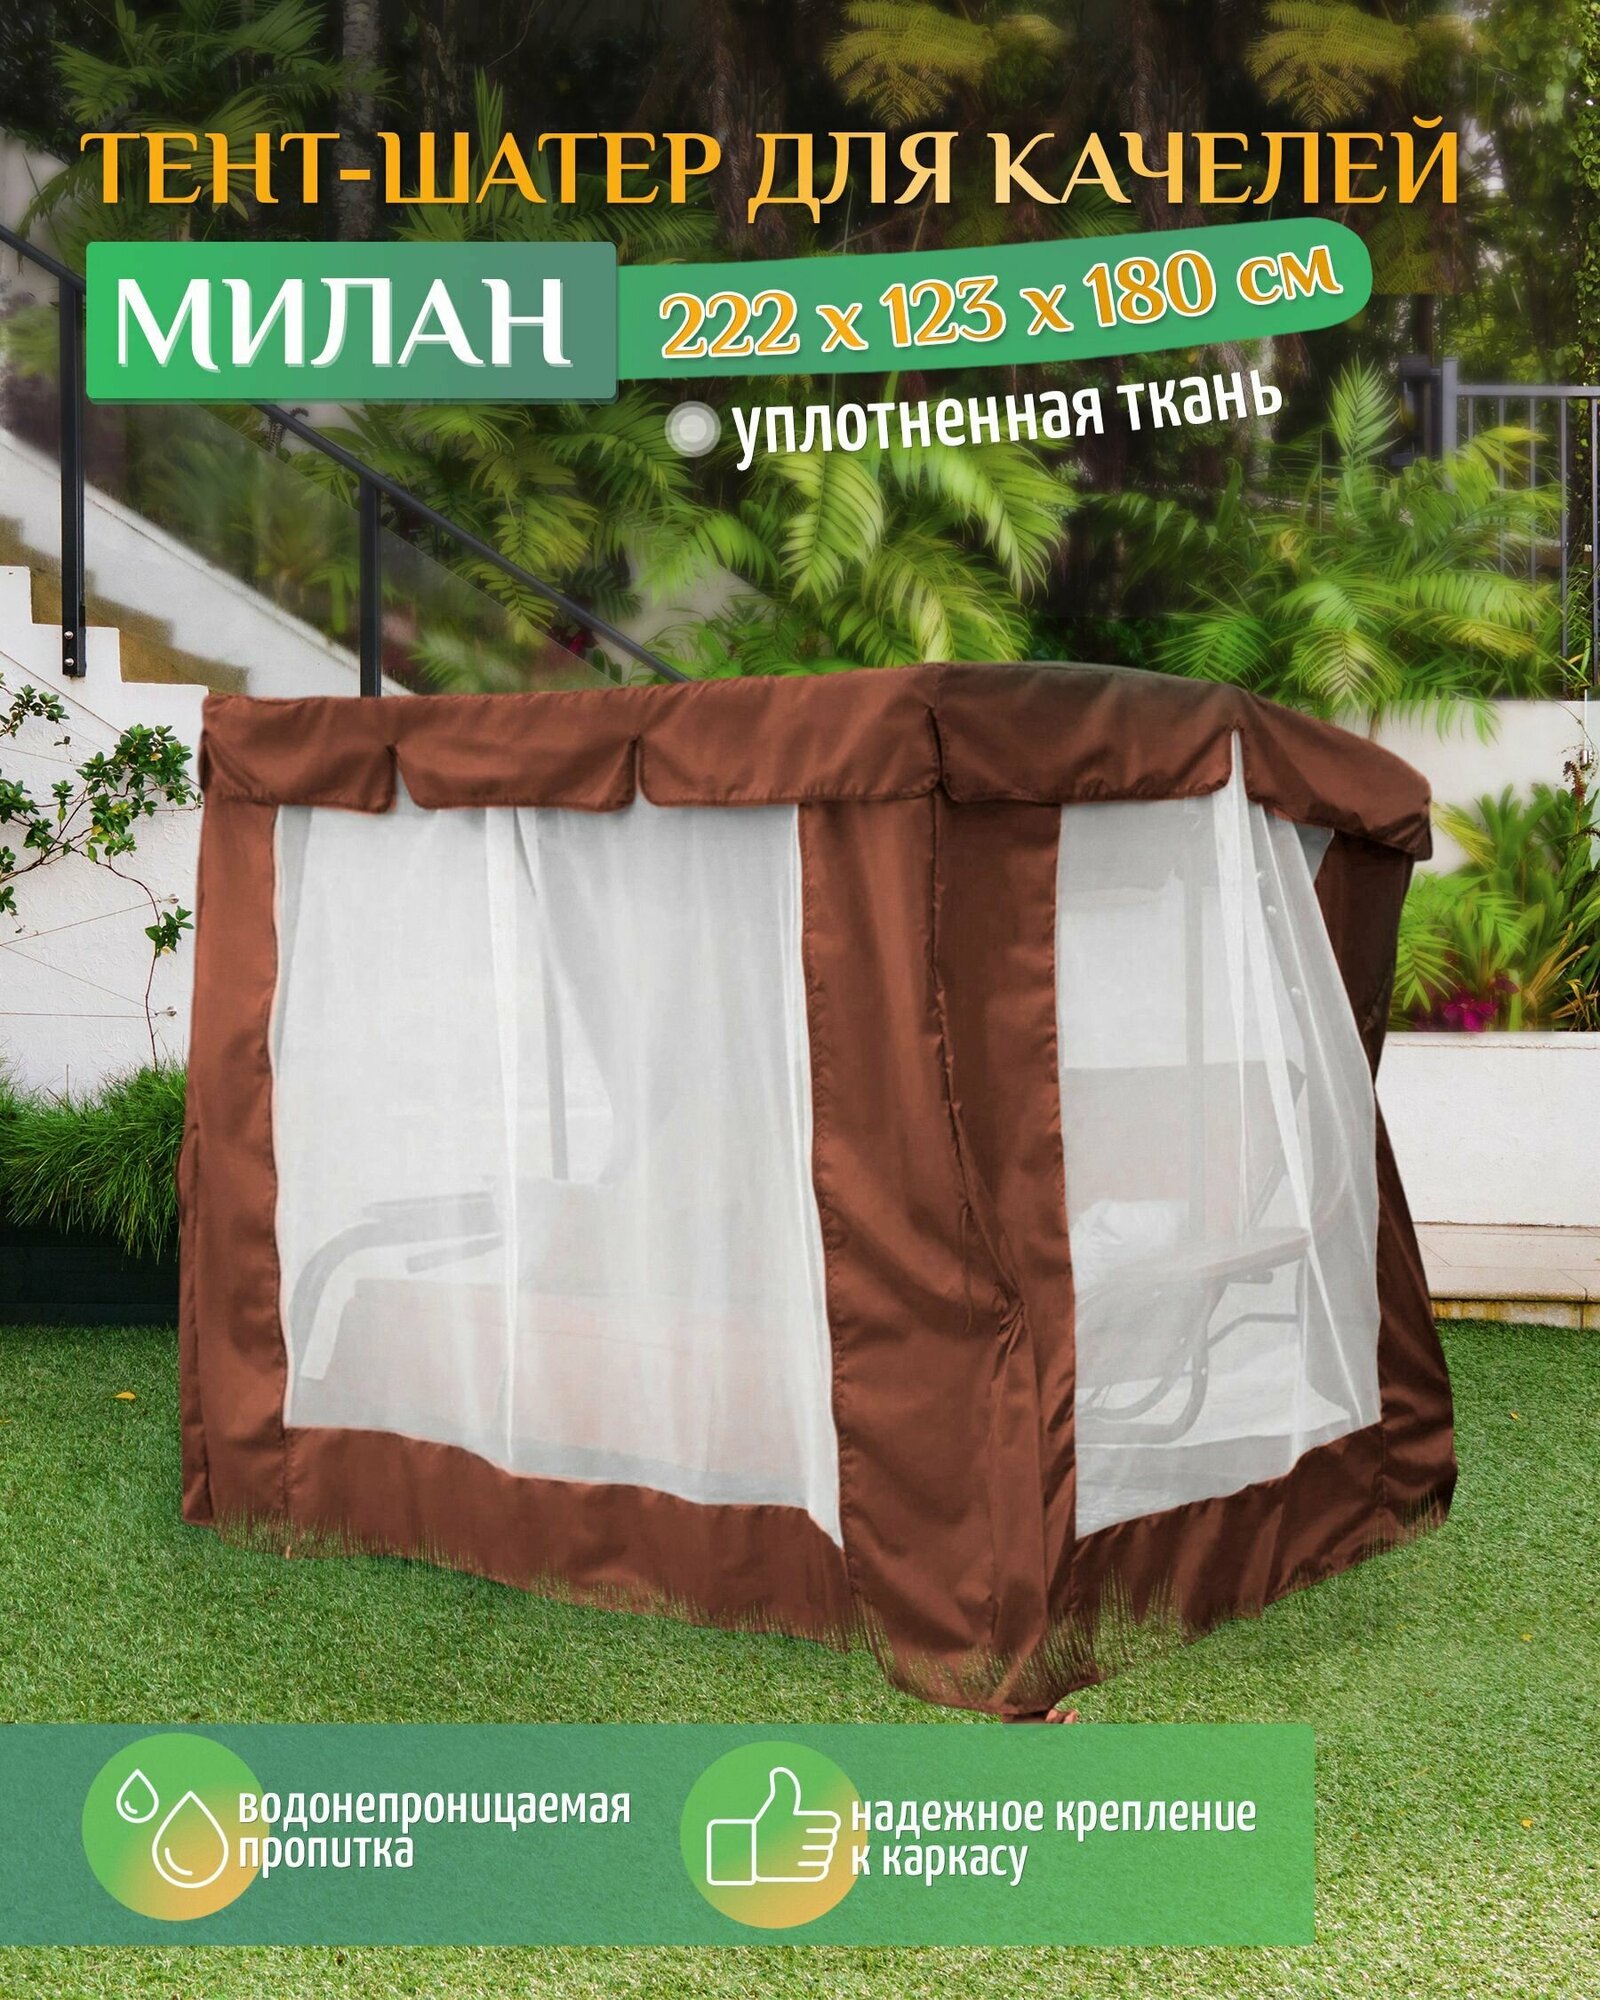 Тент шатер для качелей Милан (222х123х180 см) коричневый